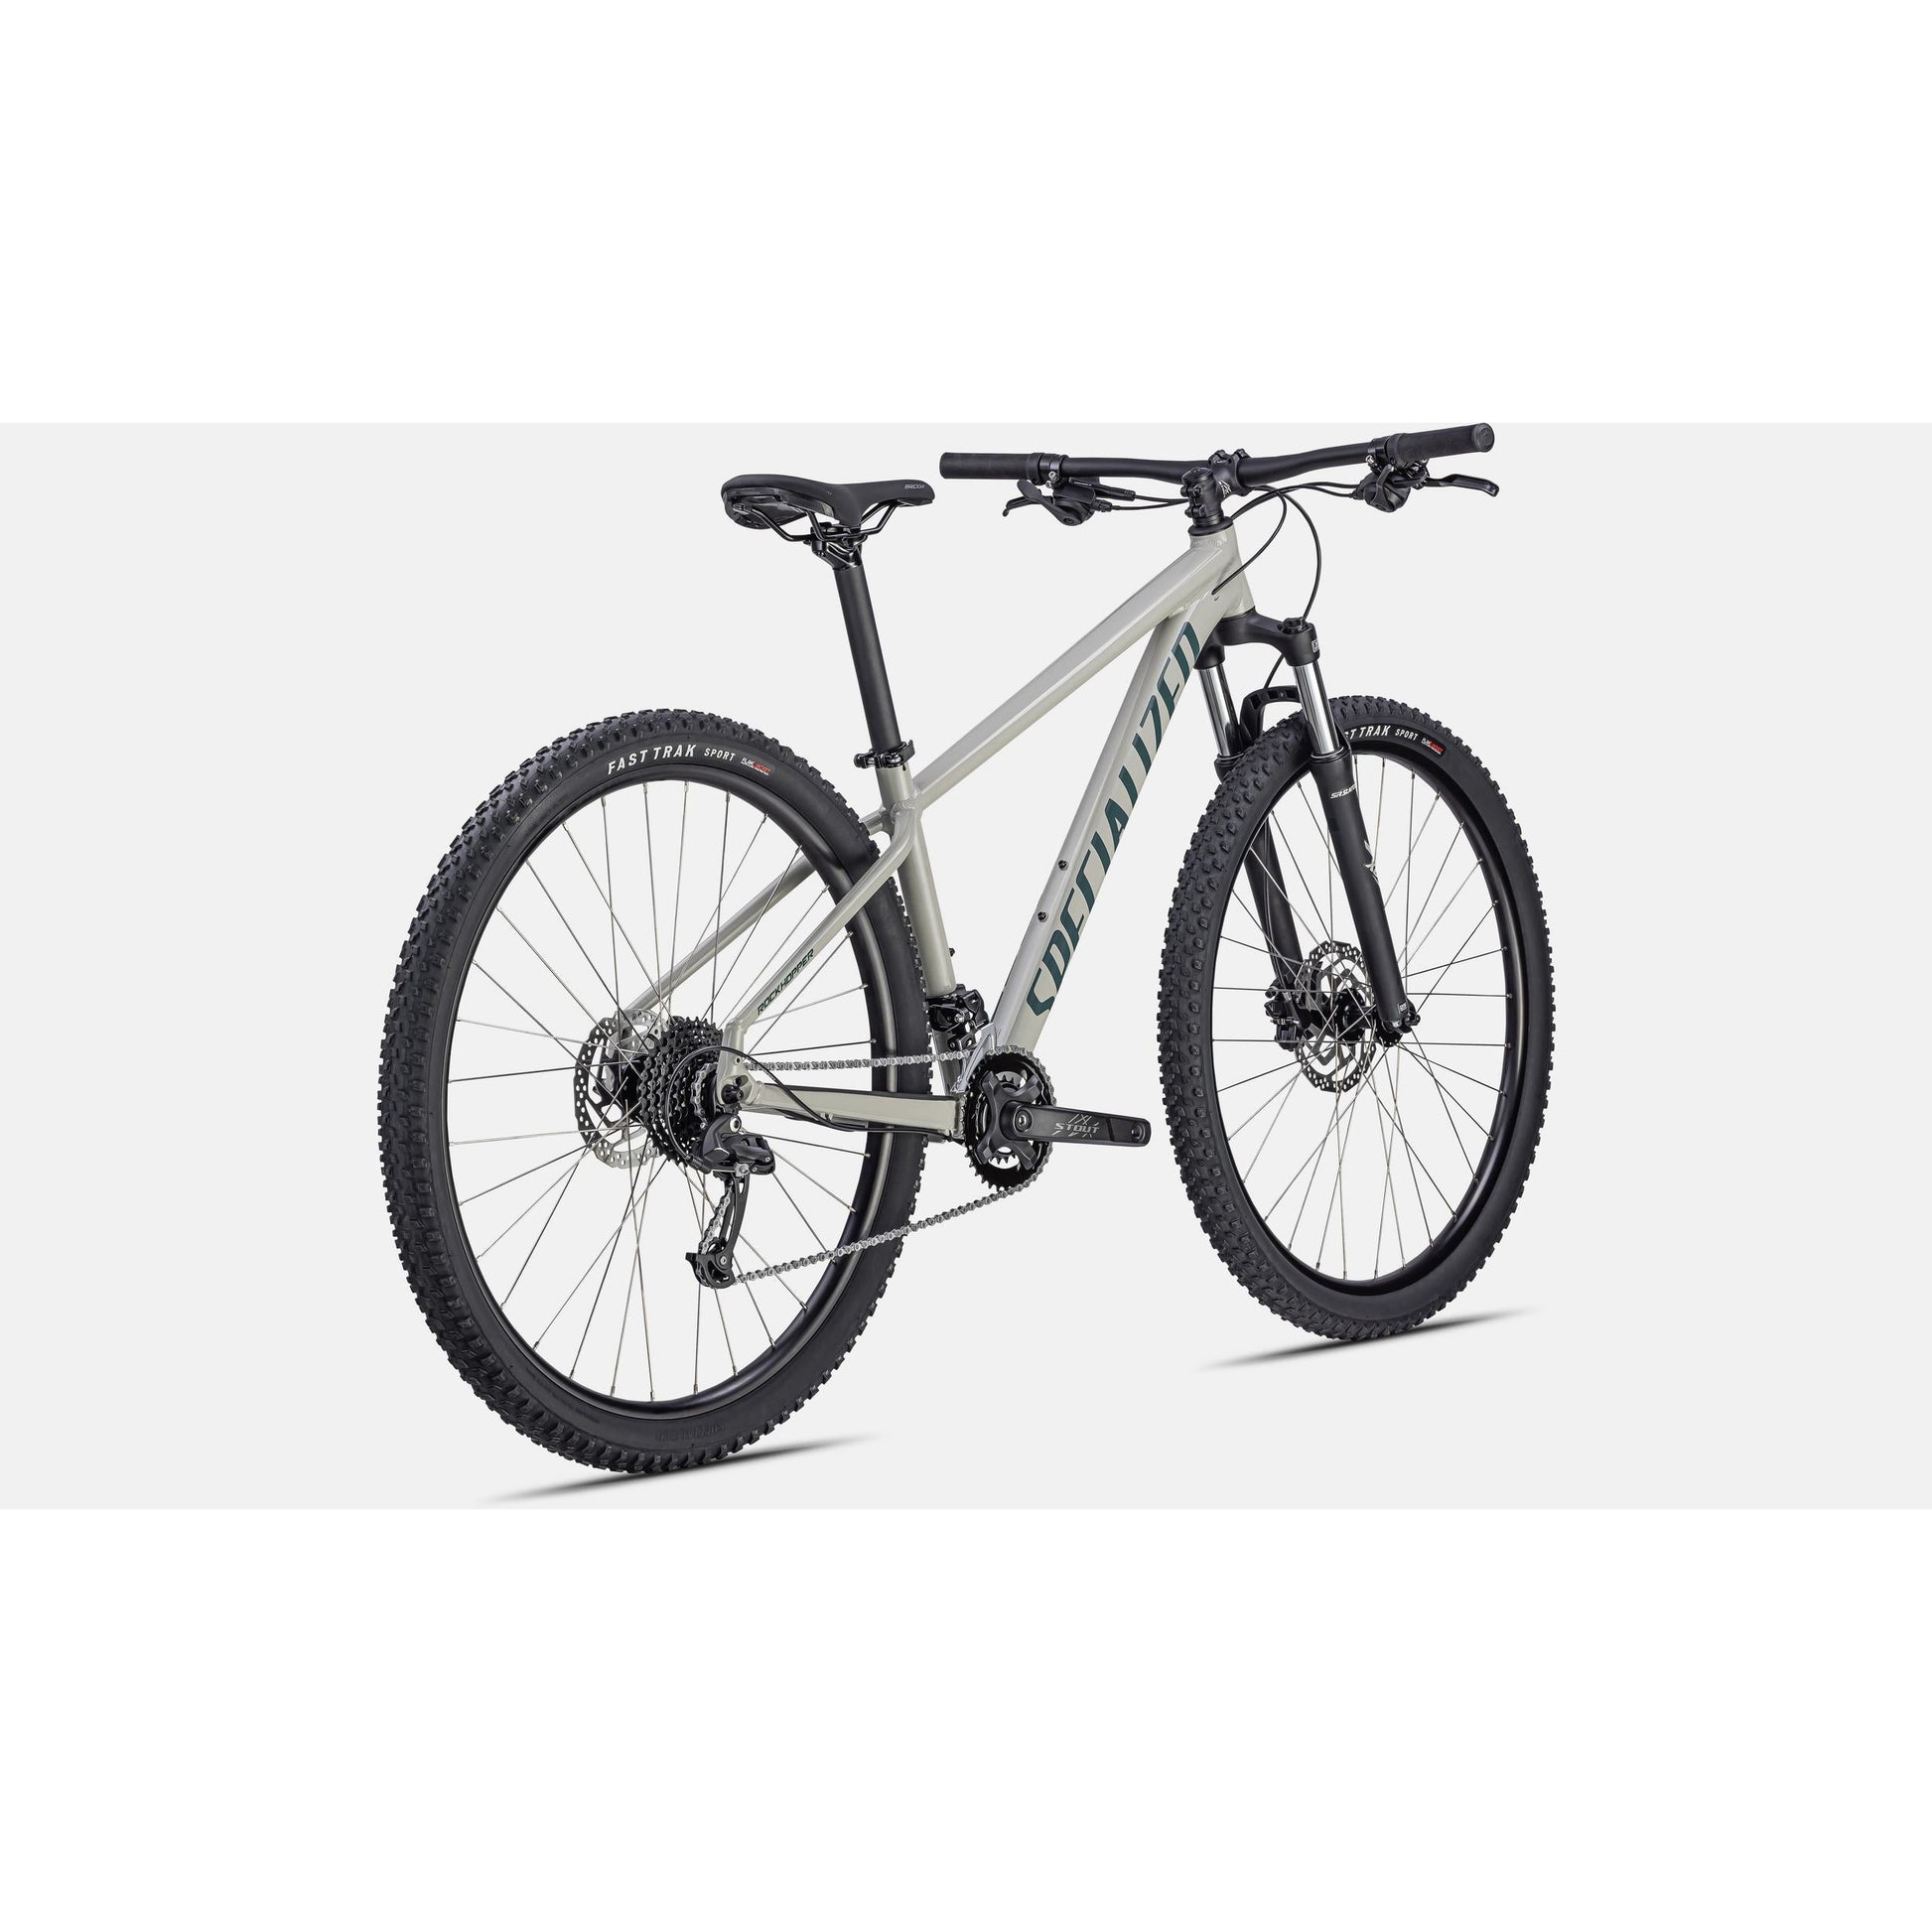 Specialized Rockhopper Sport 27.5" Mountain Bike - Bikes - Bicycle Warehouse